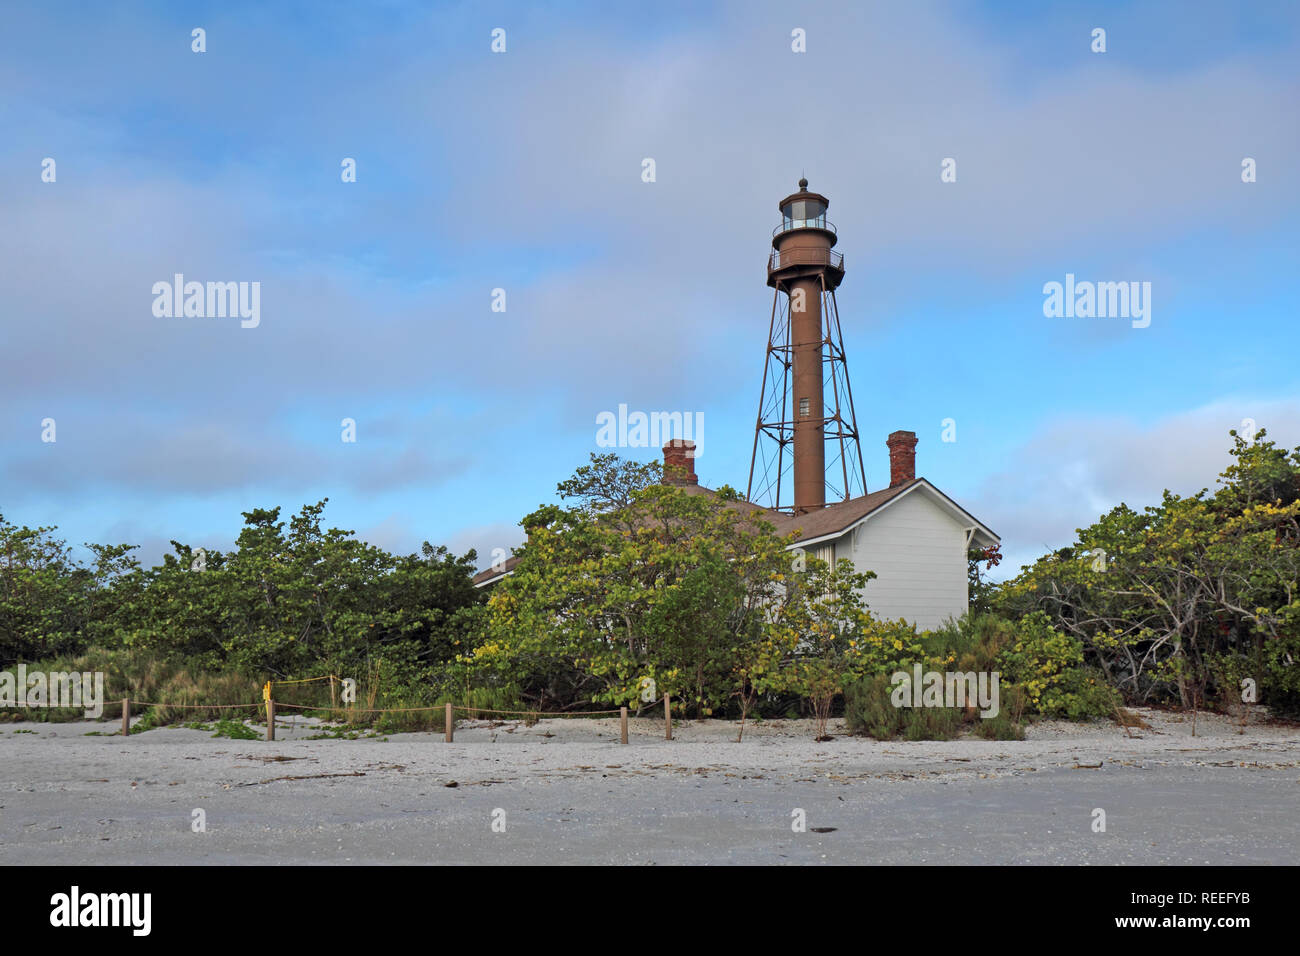 The Sanibel Island or Point Ybel Light on Sanibel Island, Florida with surrounding vegetation viewed from Lighthouse Beach Park Stock Photo